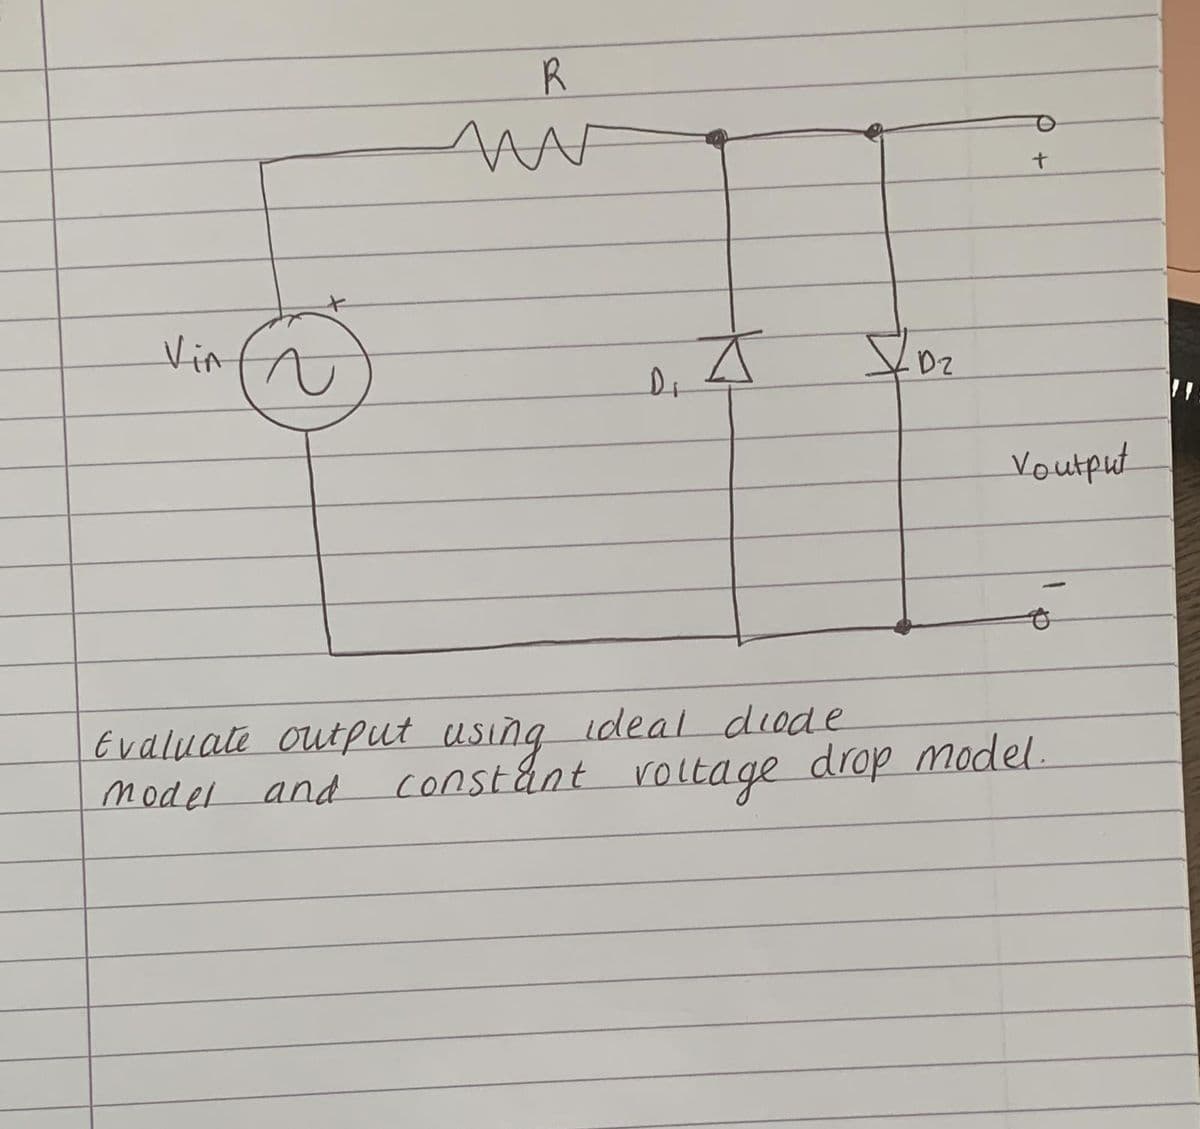 Vin
R
MAF
D₁
A
Evaluate output using ideal diode
model
and
12/02
Dz
Voutput
constant voltage drop model.